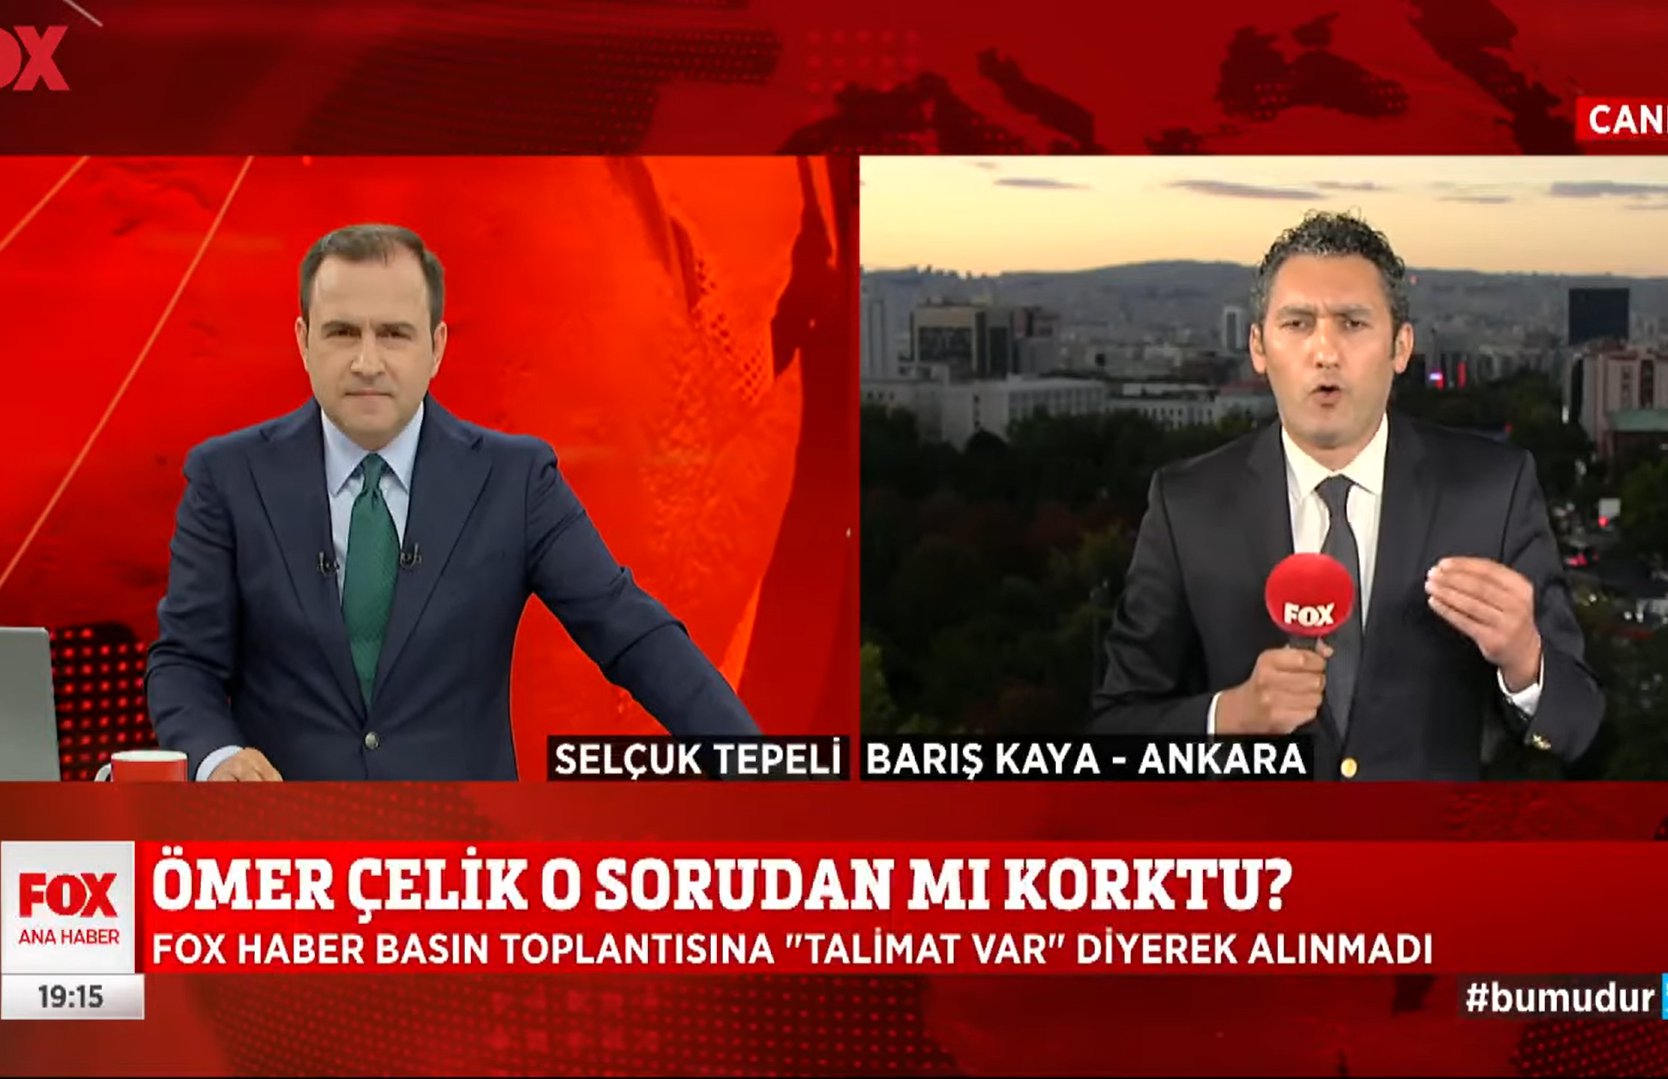 FOX TV reporter not allowed in AKP spokesperson's press conference